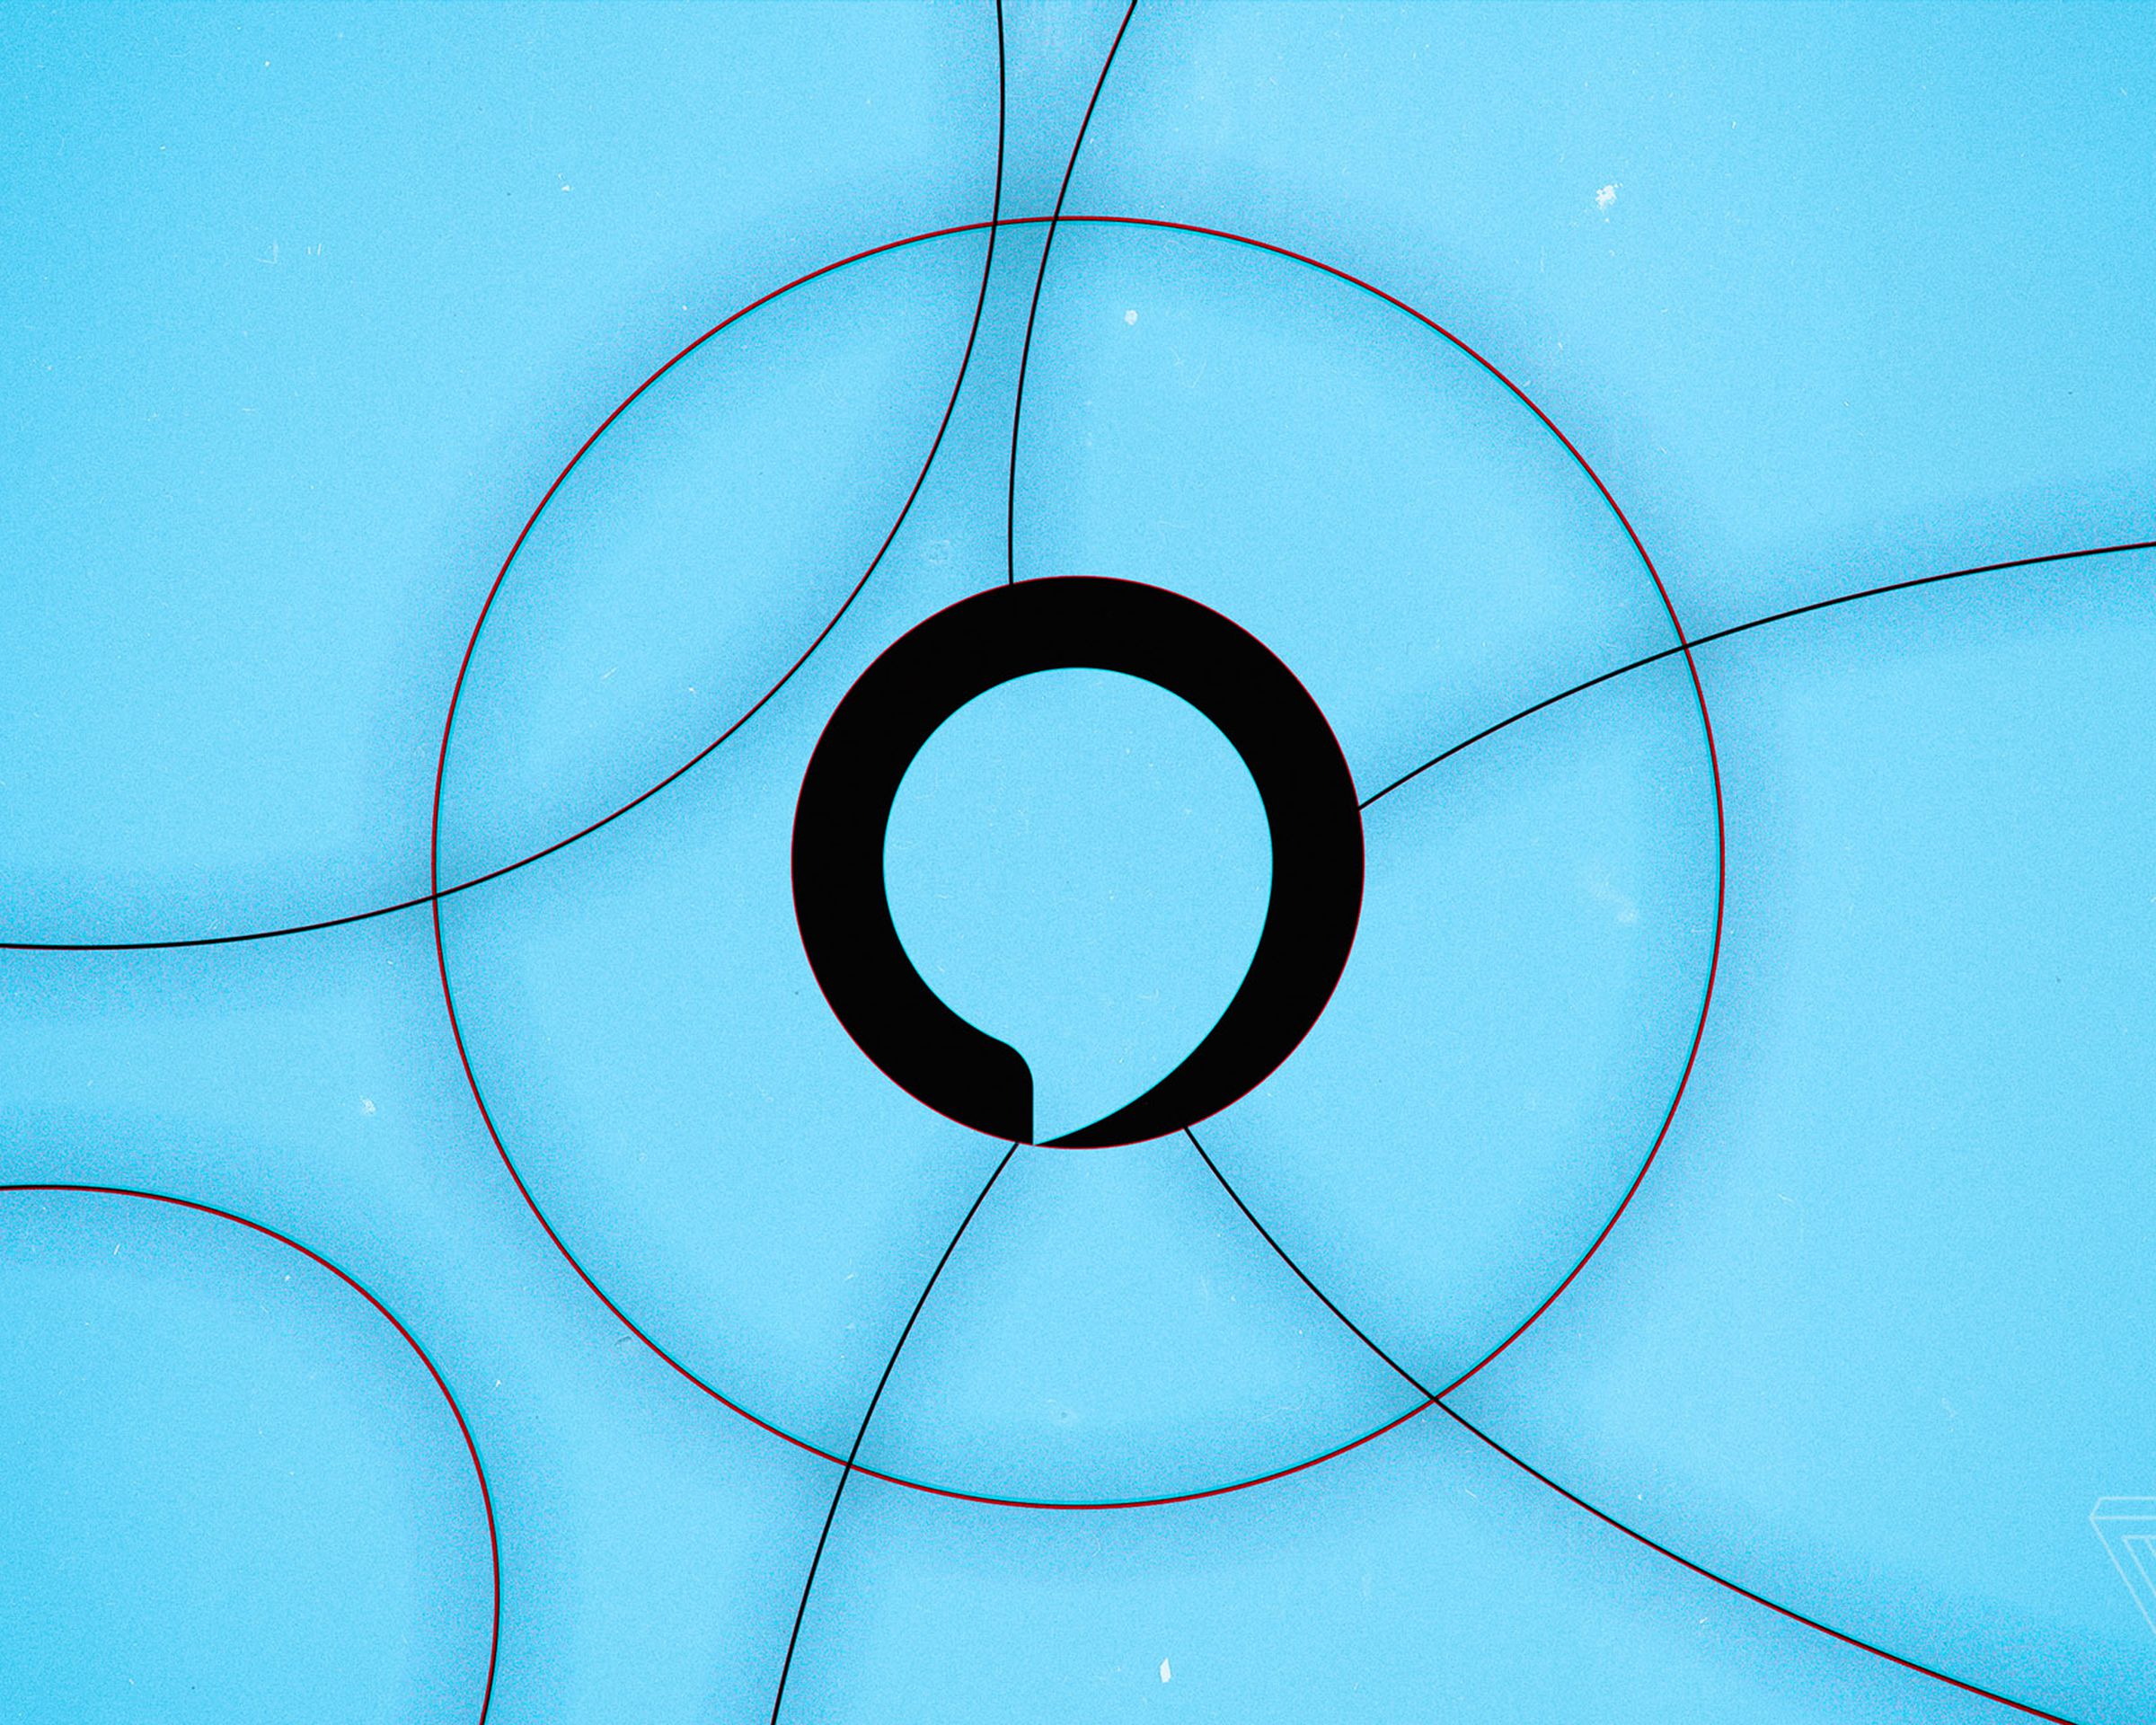 Amazon’s Alexa logo against a blue background